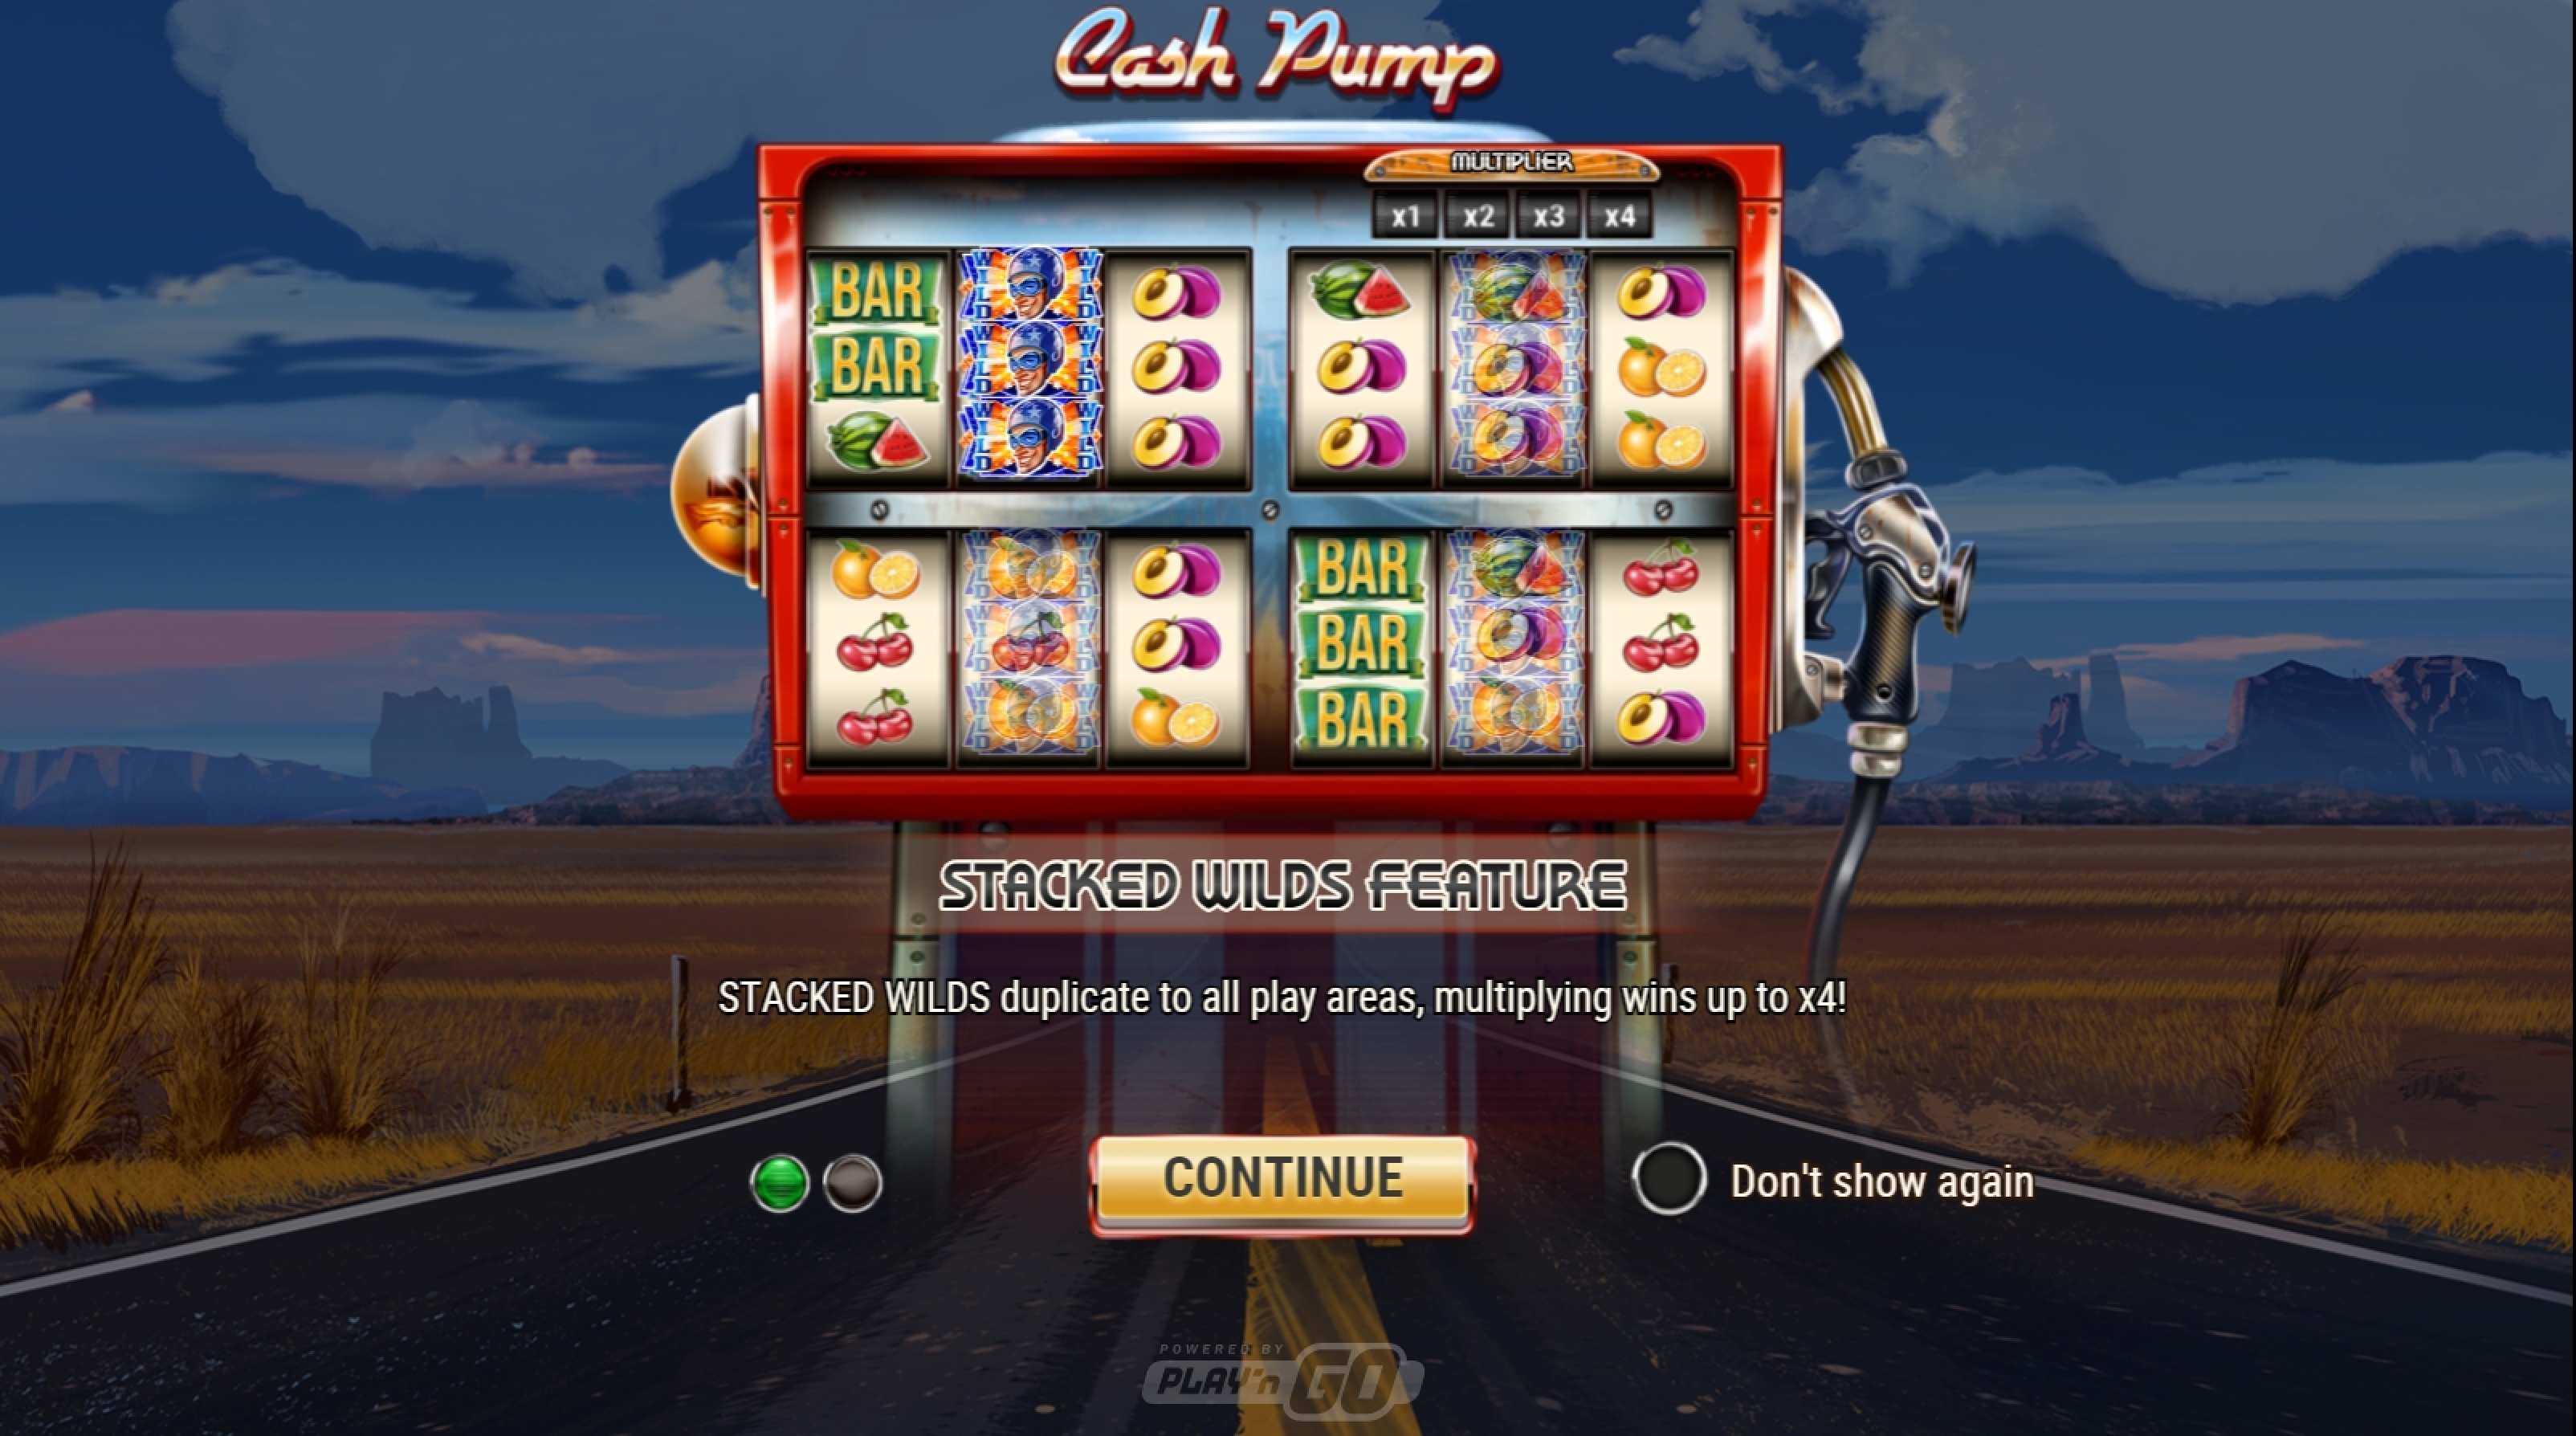 Play Cash Pump Free Casino Slot Game by Playn GO